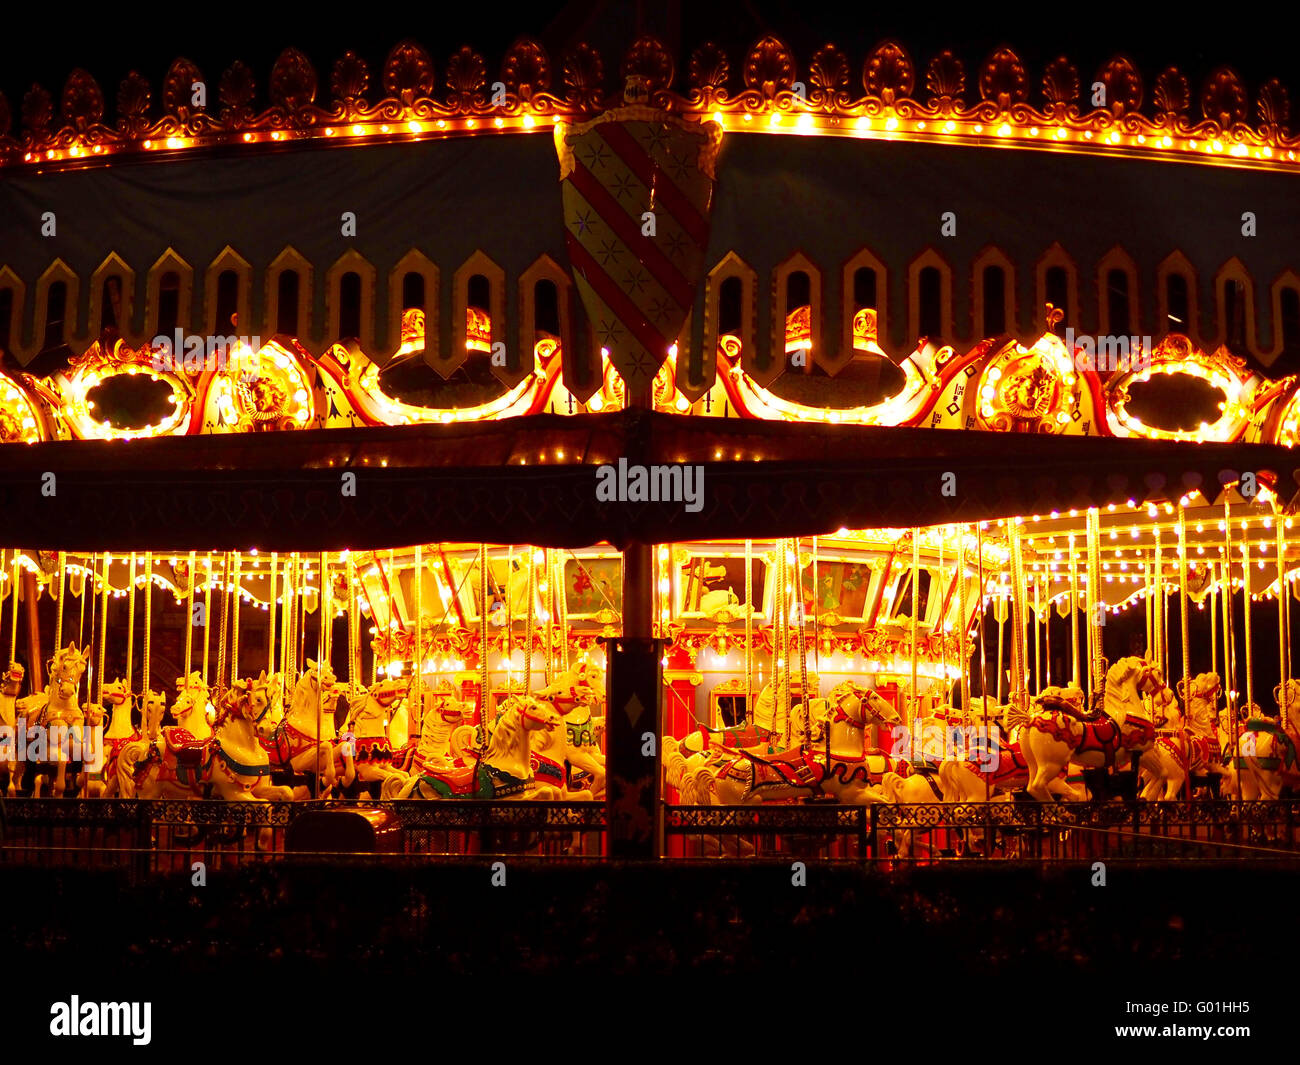 Disneyland's King Arthur's Carousel at night Stock Photo